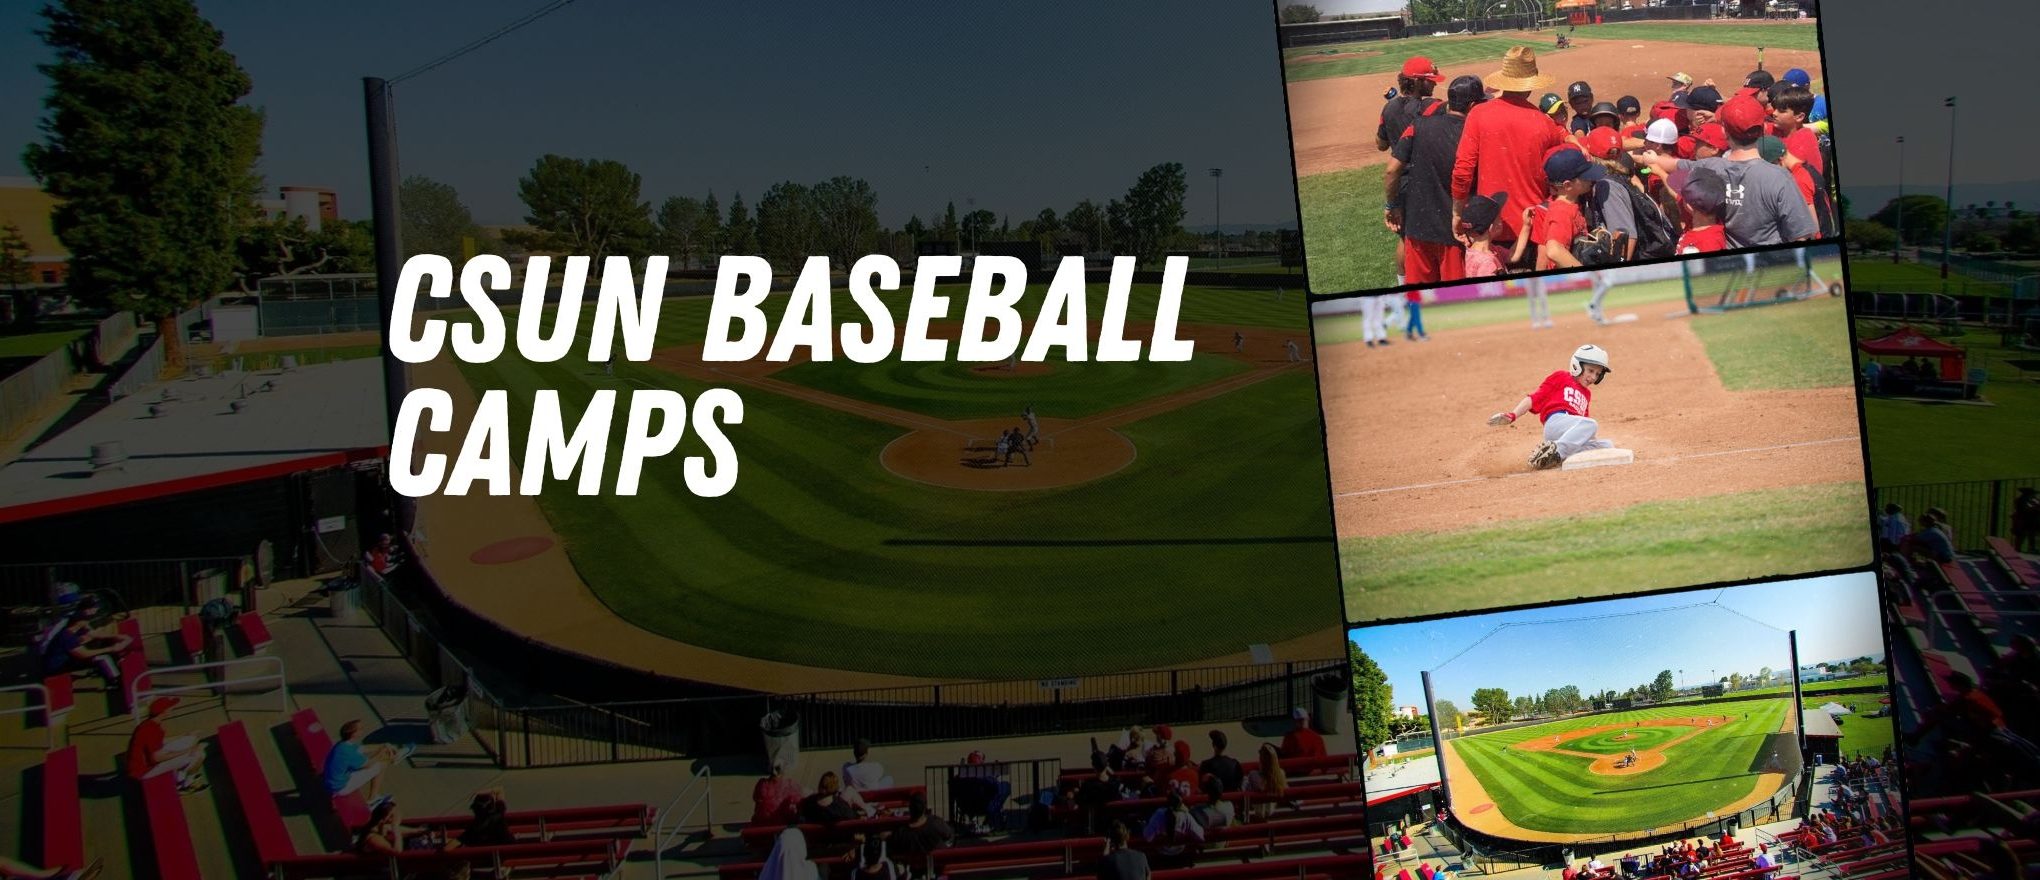 CSUN Baseball Camps